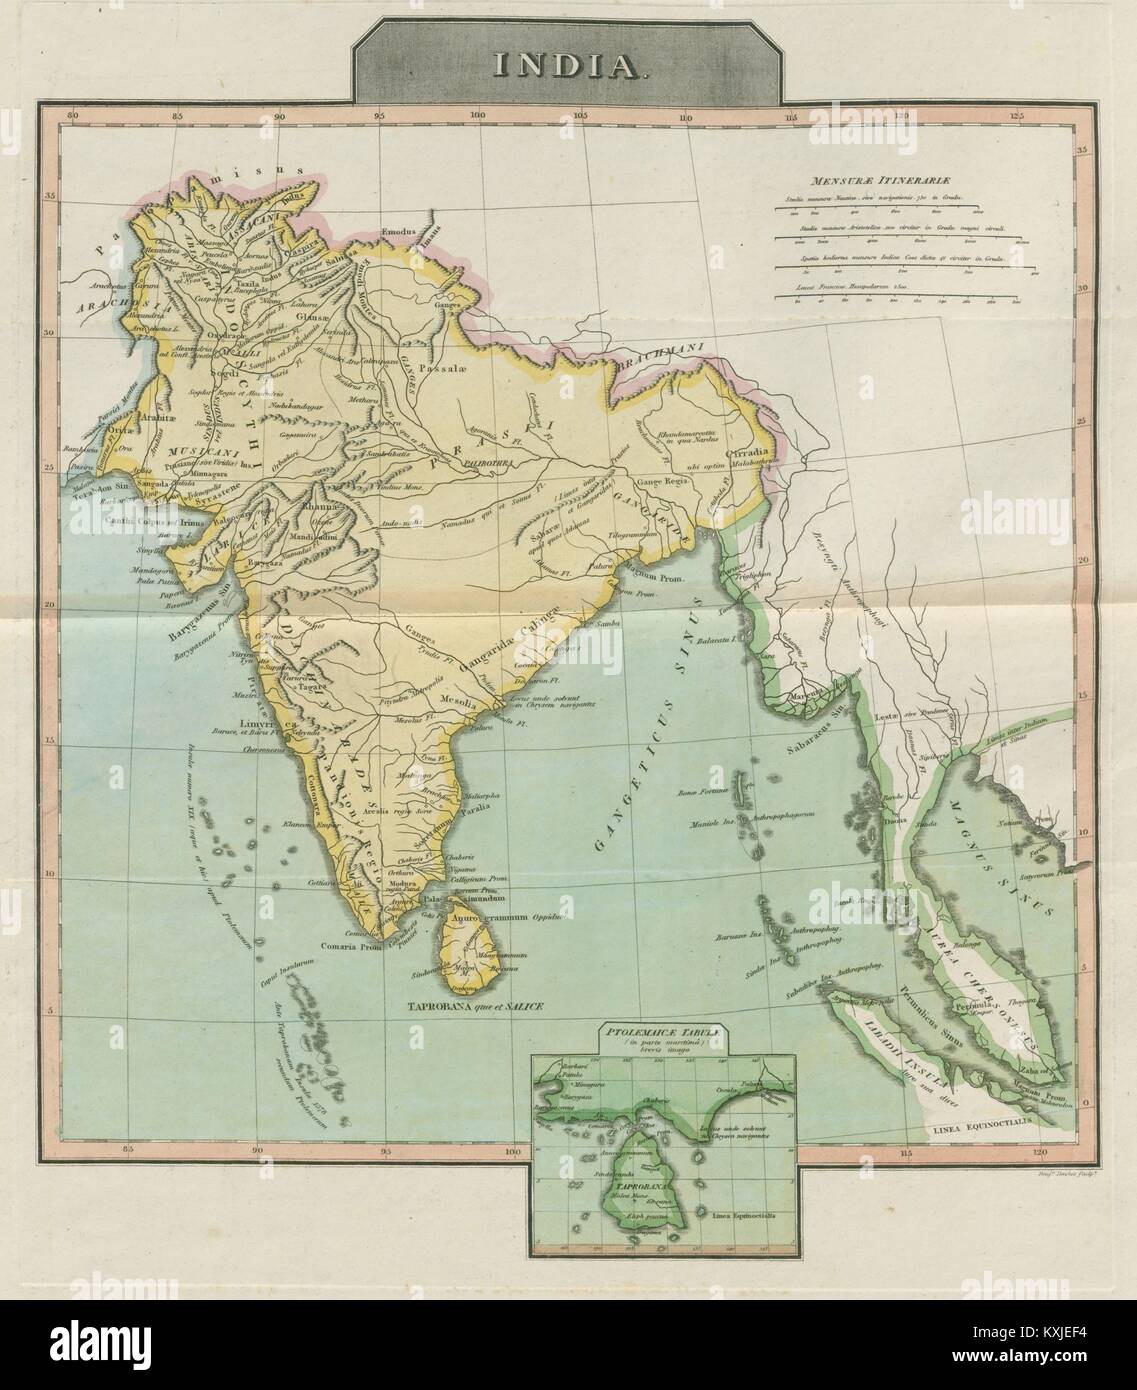 Alte "Indien". Dachinabades Prasii Indo Scythi Taprobana. D'Anville 1815 Karte Stockfoto